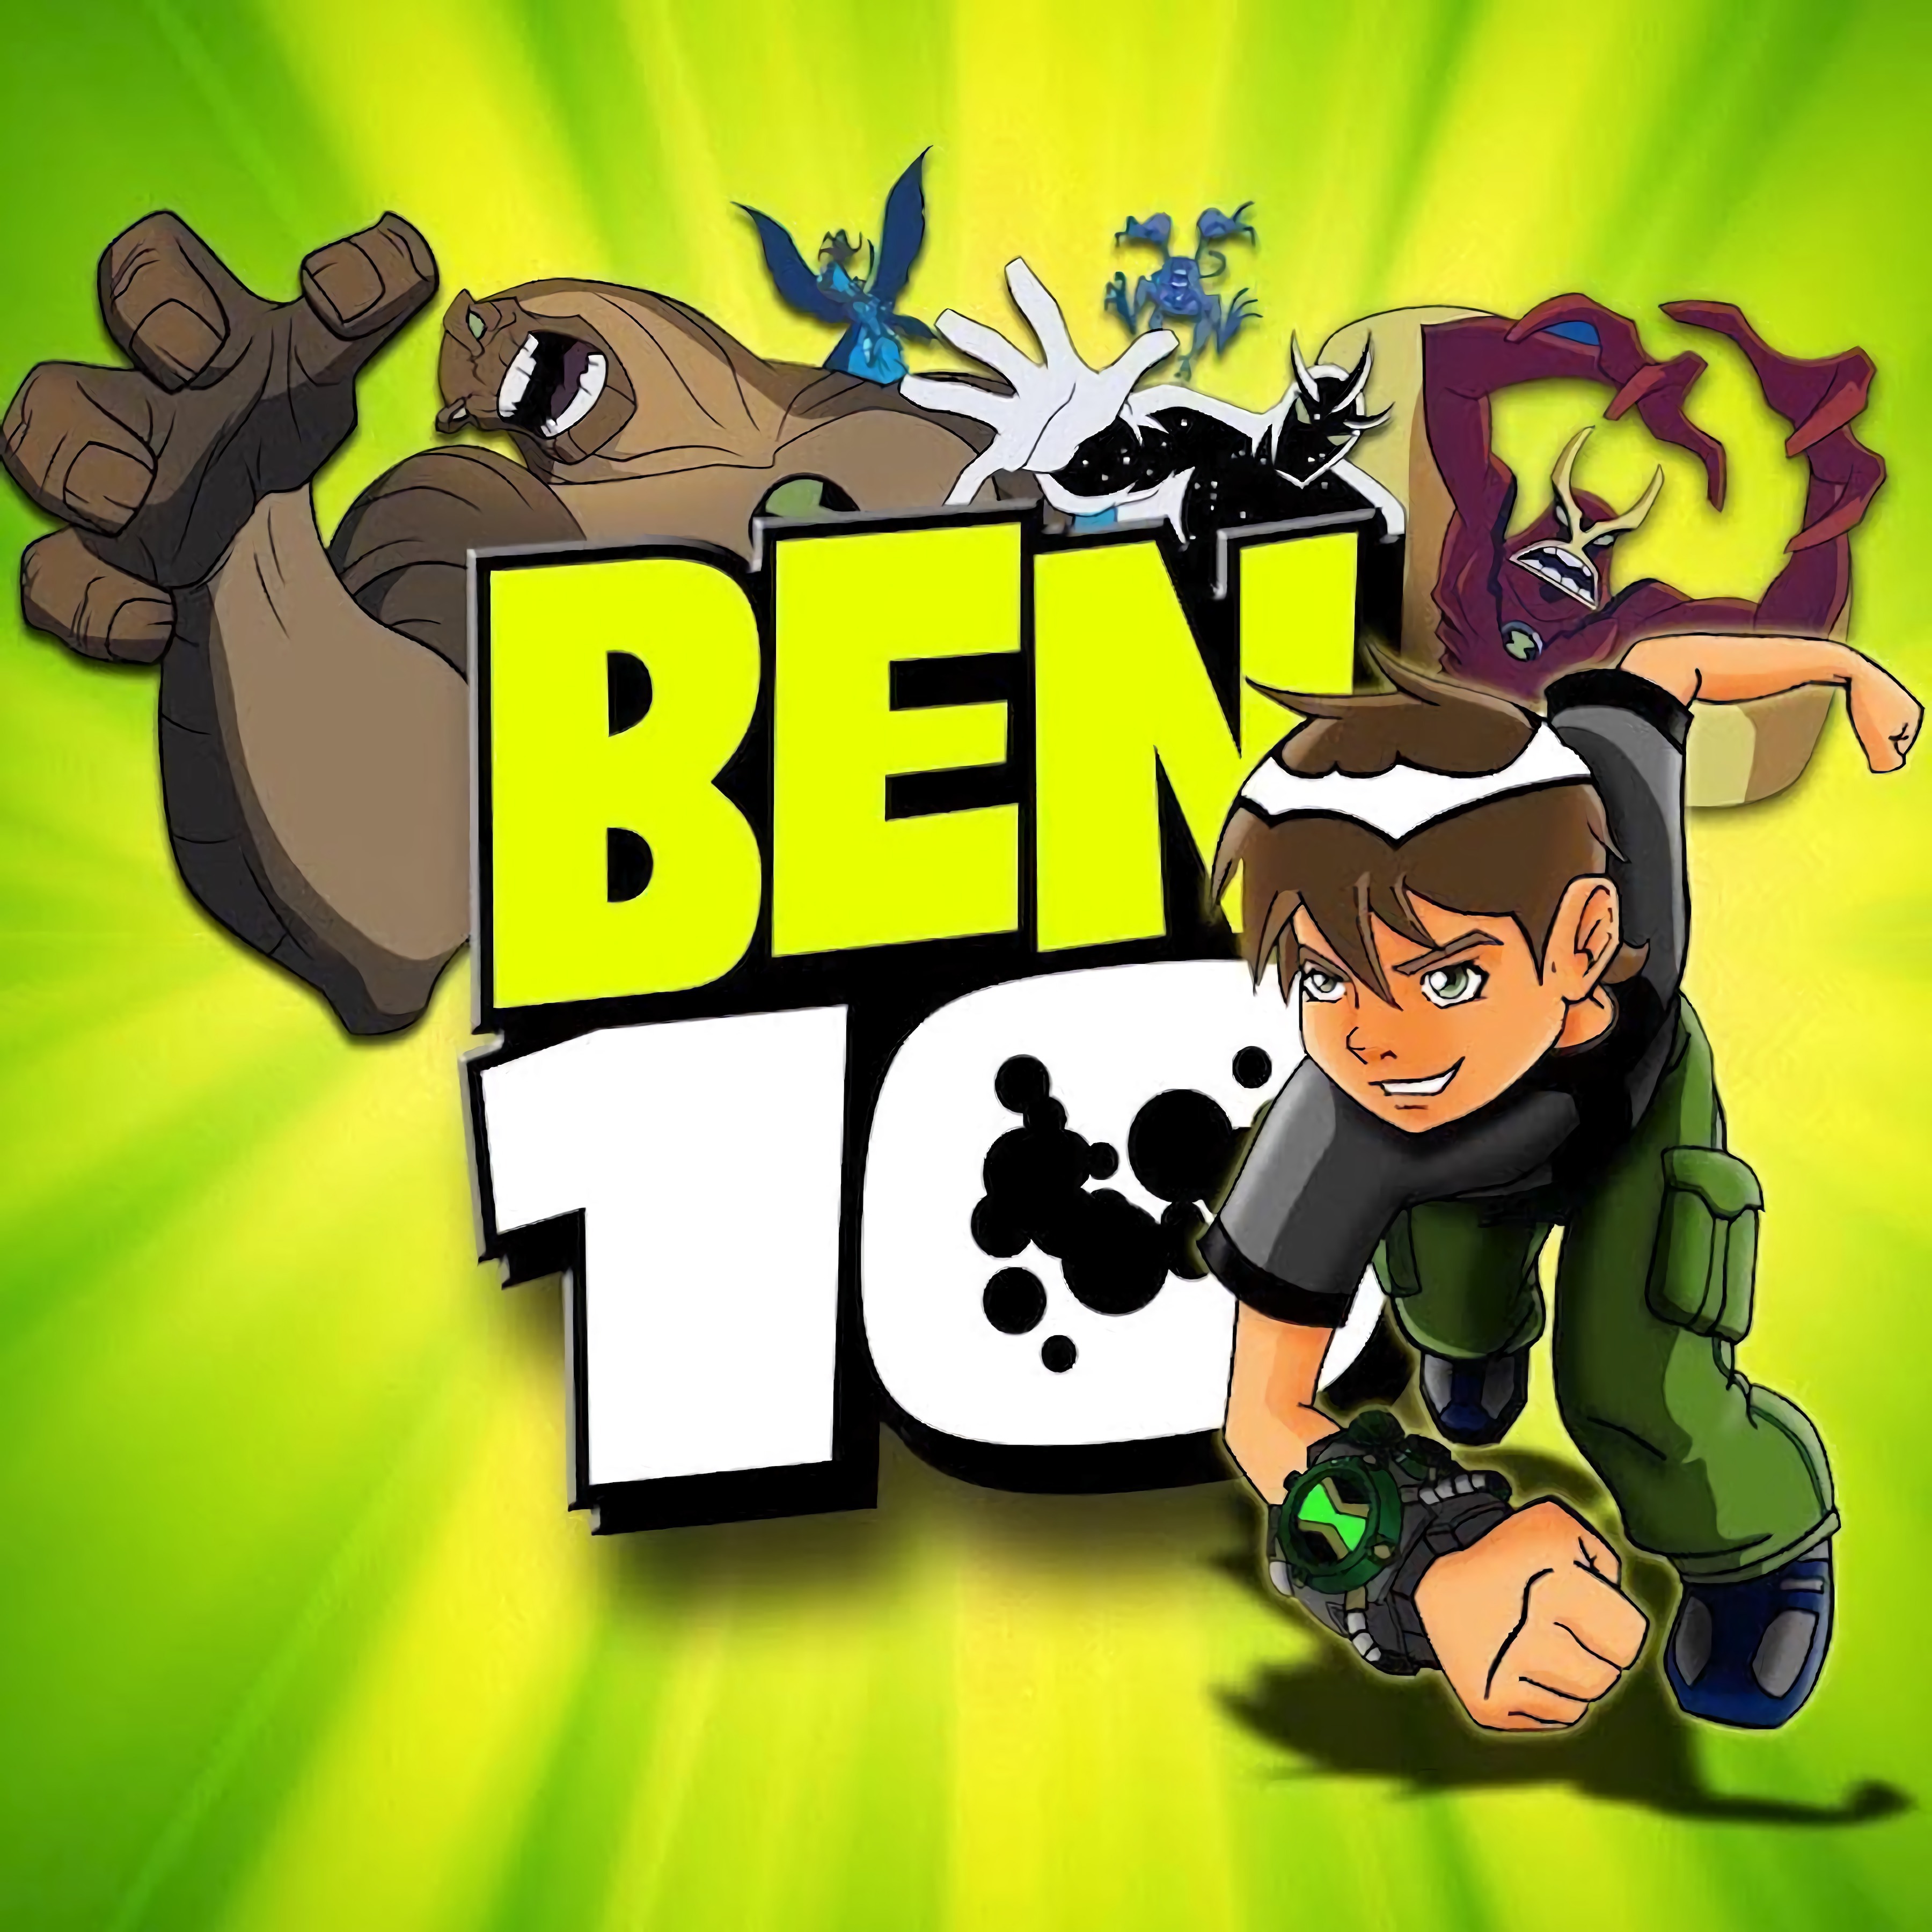 Ben 10 Games Play Free Online Ben 10 Games on Friv 2